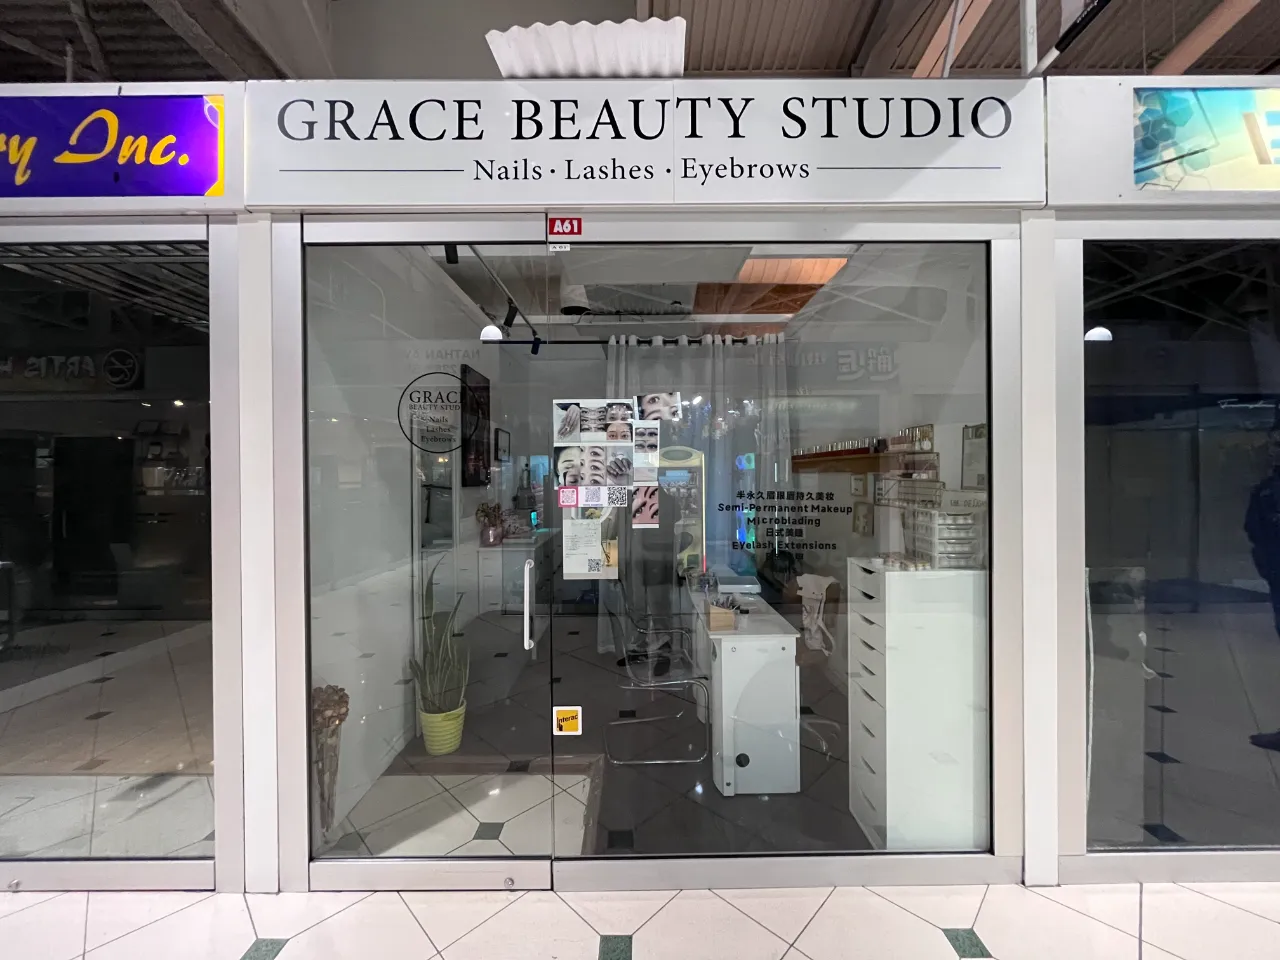 A61 - Grace Beauty Studio